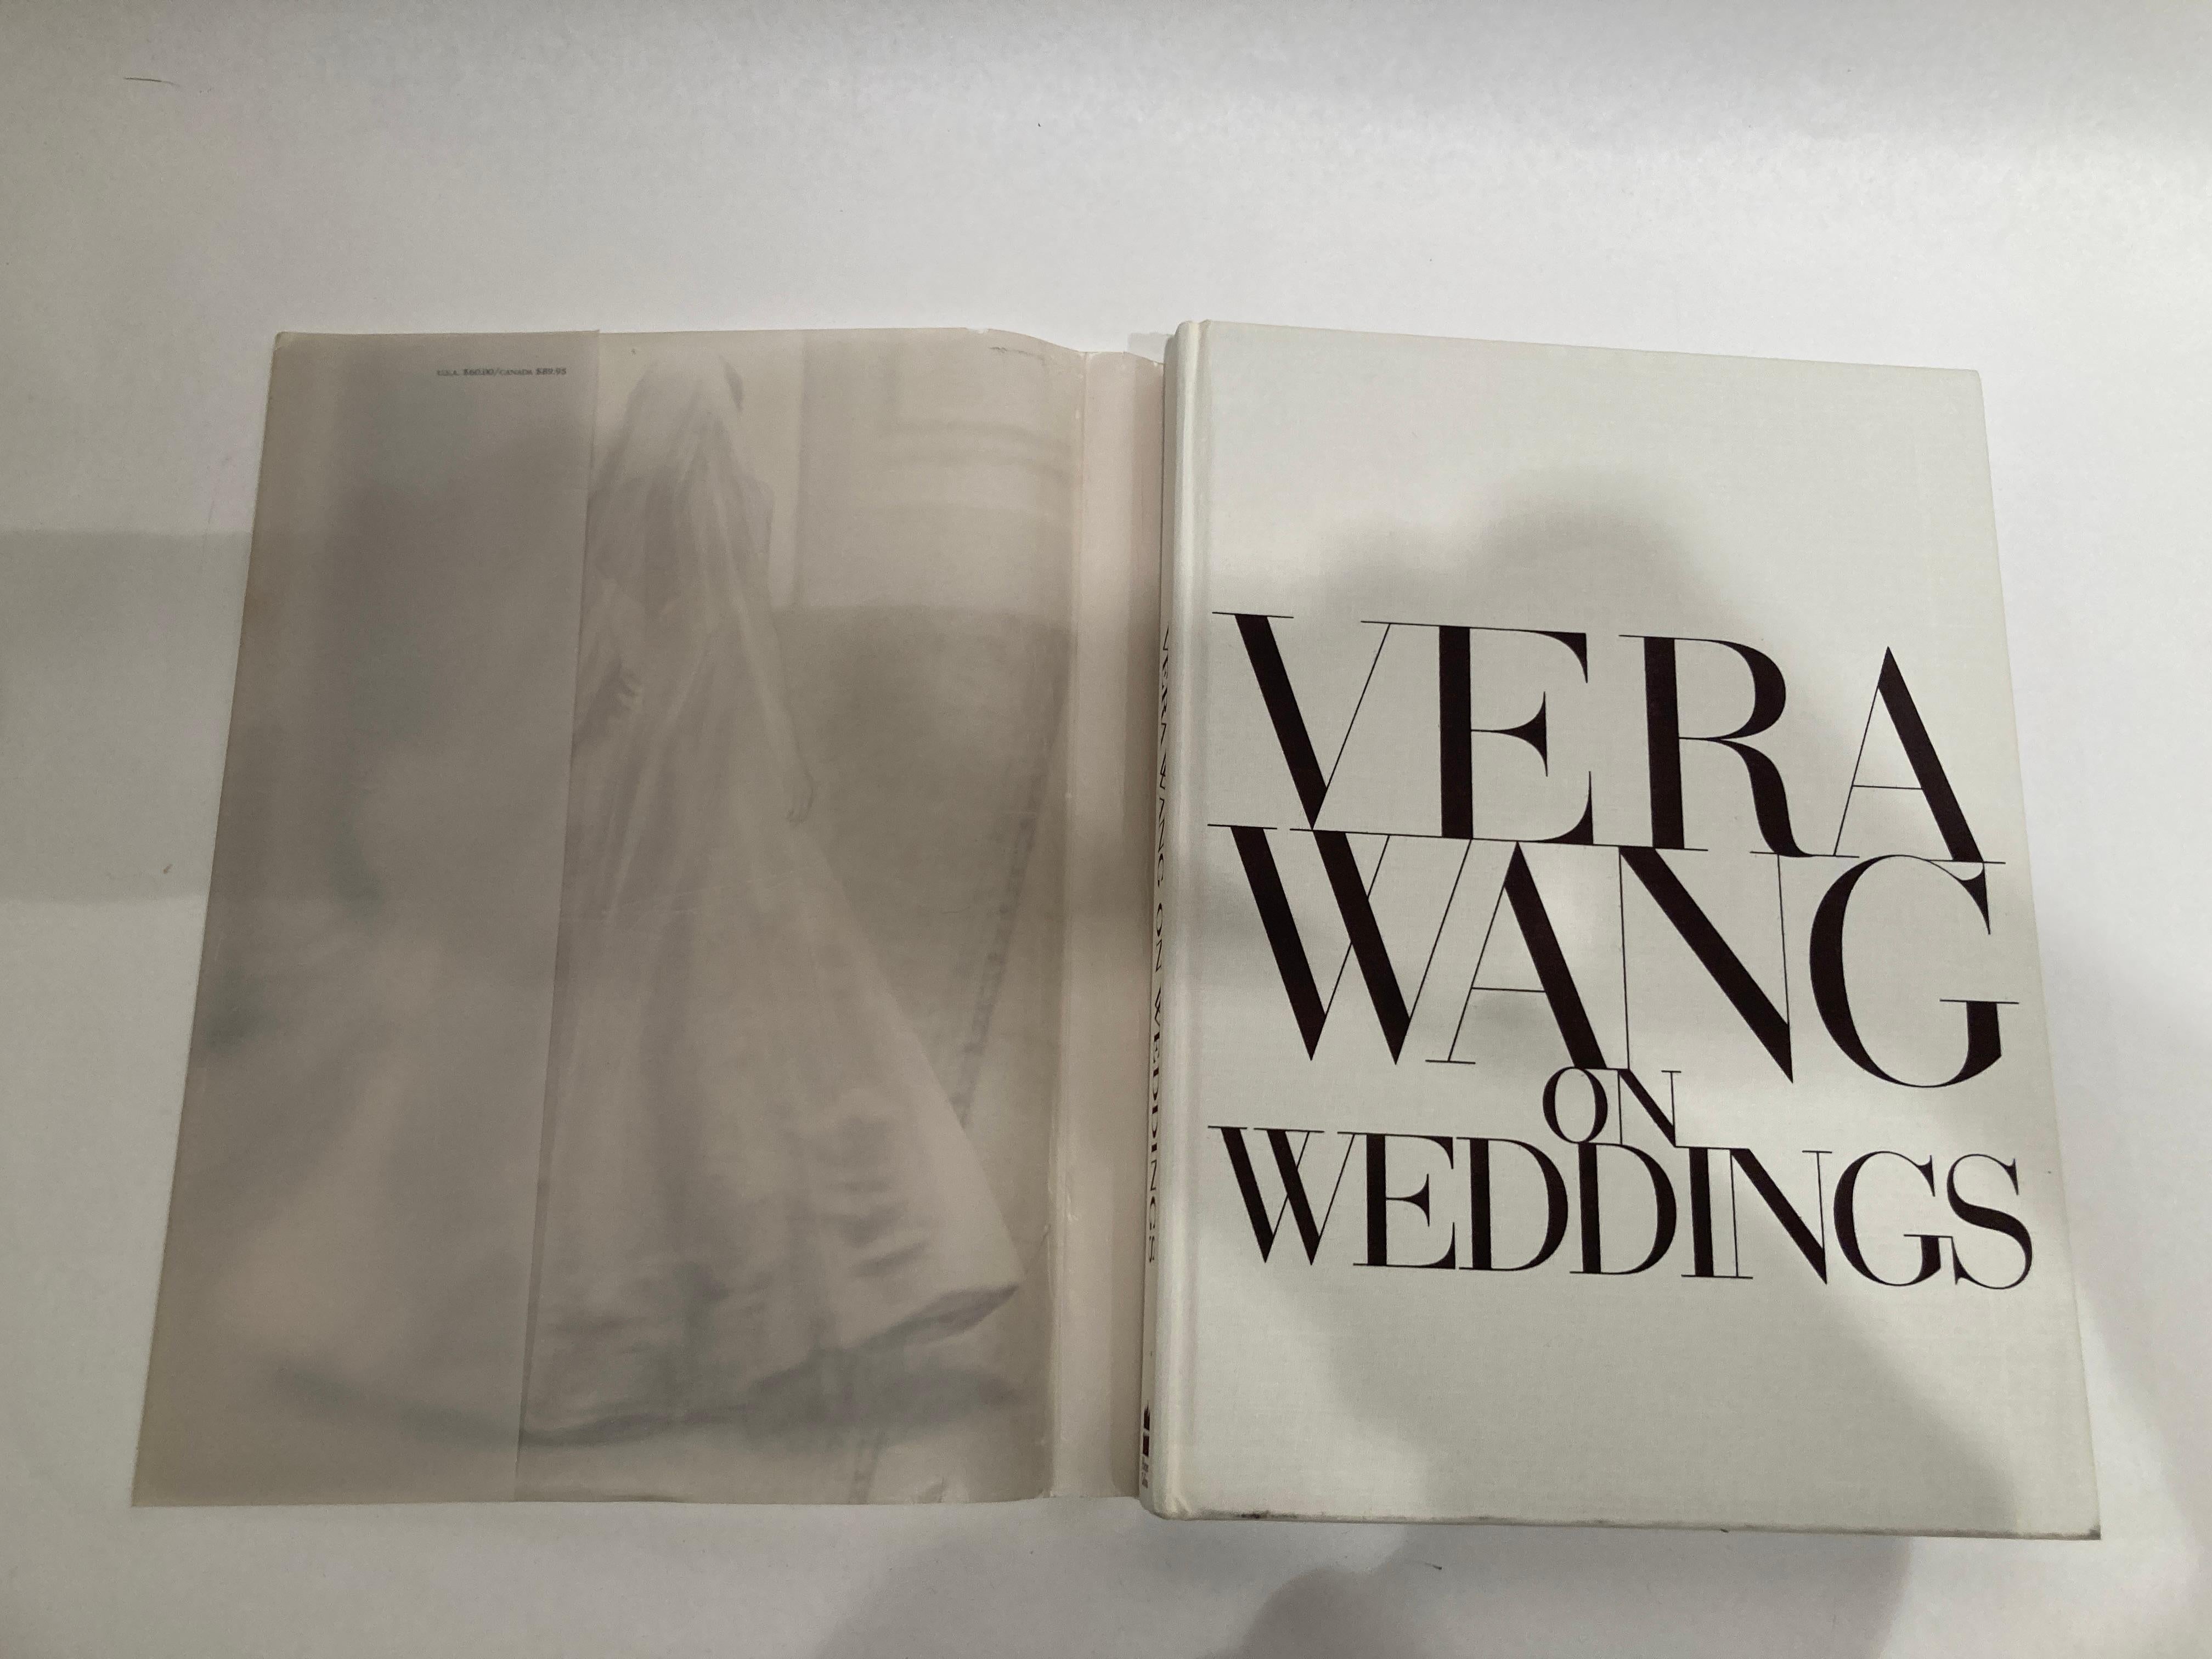 Vera Wang On Weddings by Vera Wang - Grand livre à couverture rigide en vente 12